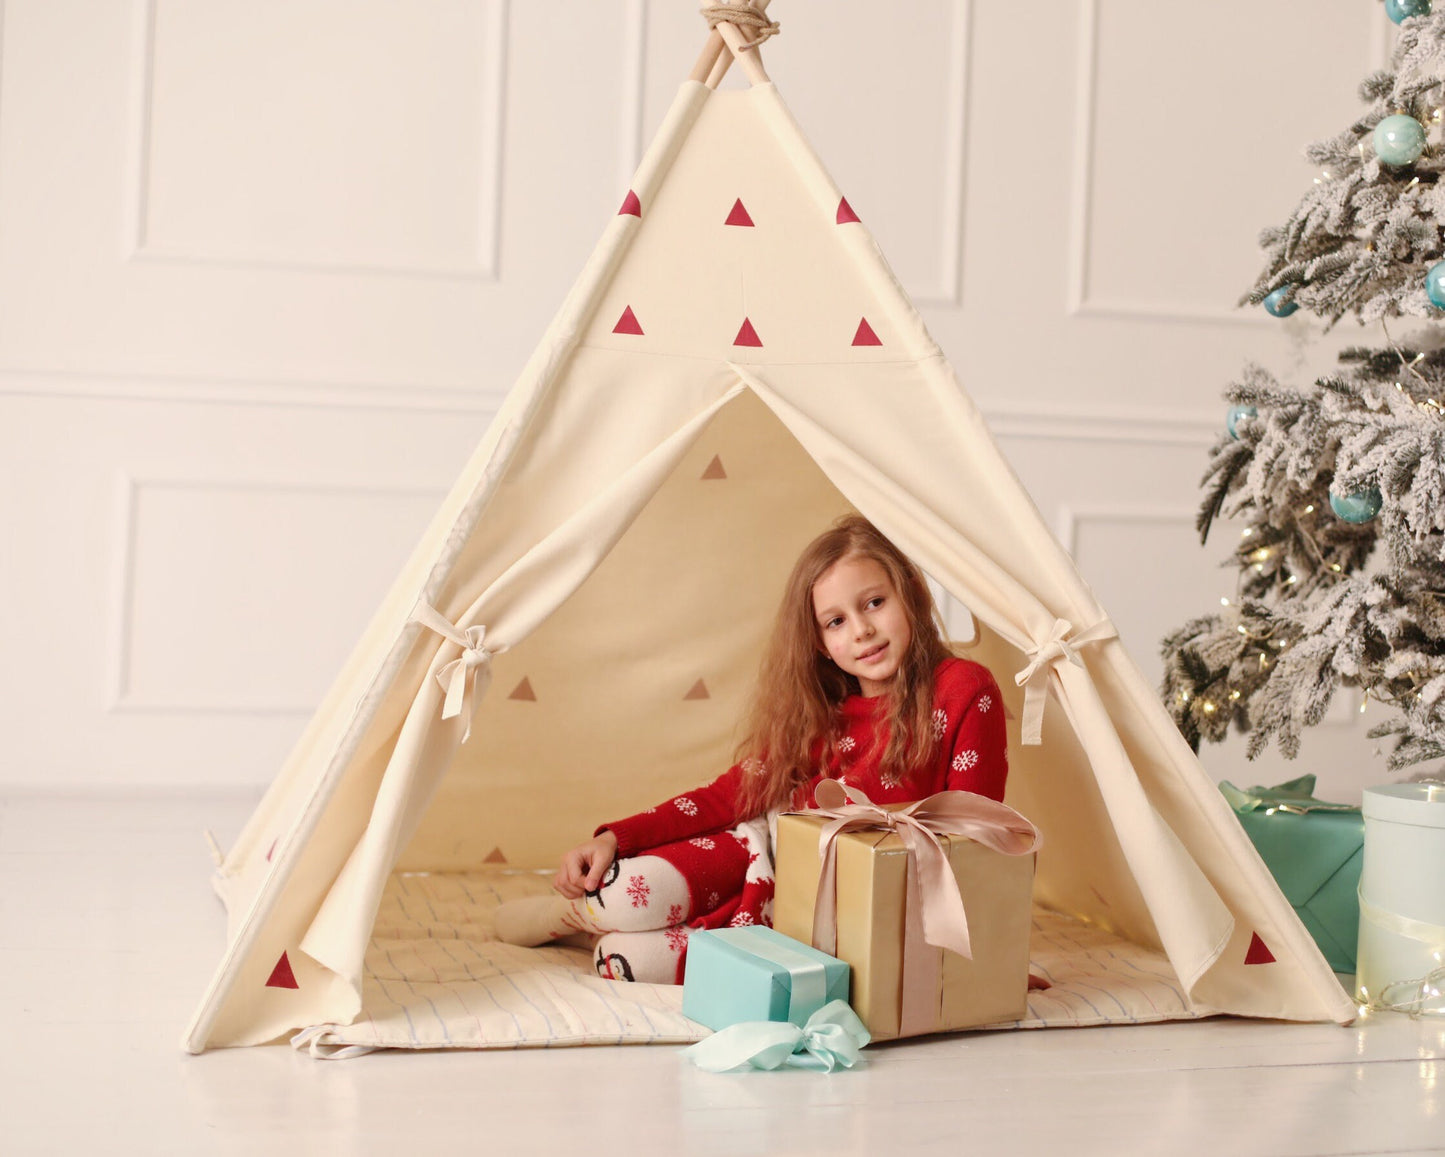 DEEP ROSE small triangles Tipi, Tipi tent, tipi, kids tipi, tipi kids, tent, play tent, play house, kids teepee, canvas tipi Christmas gift